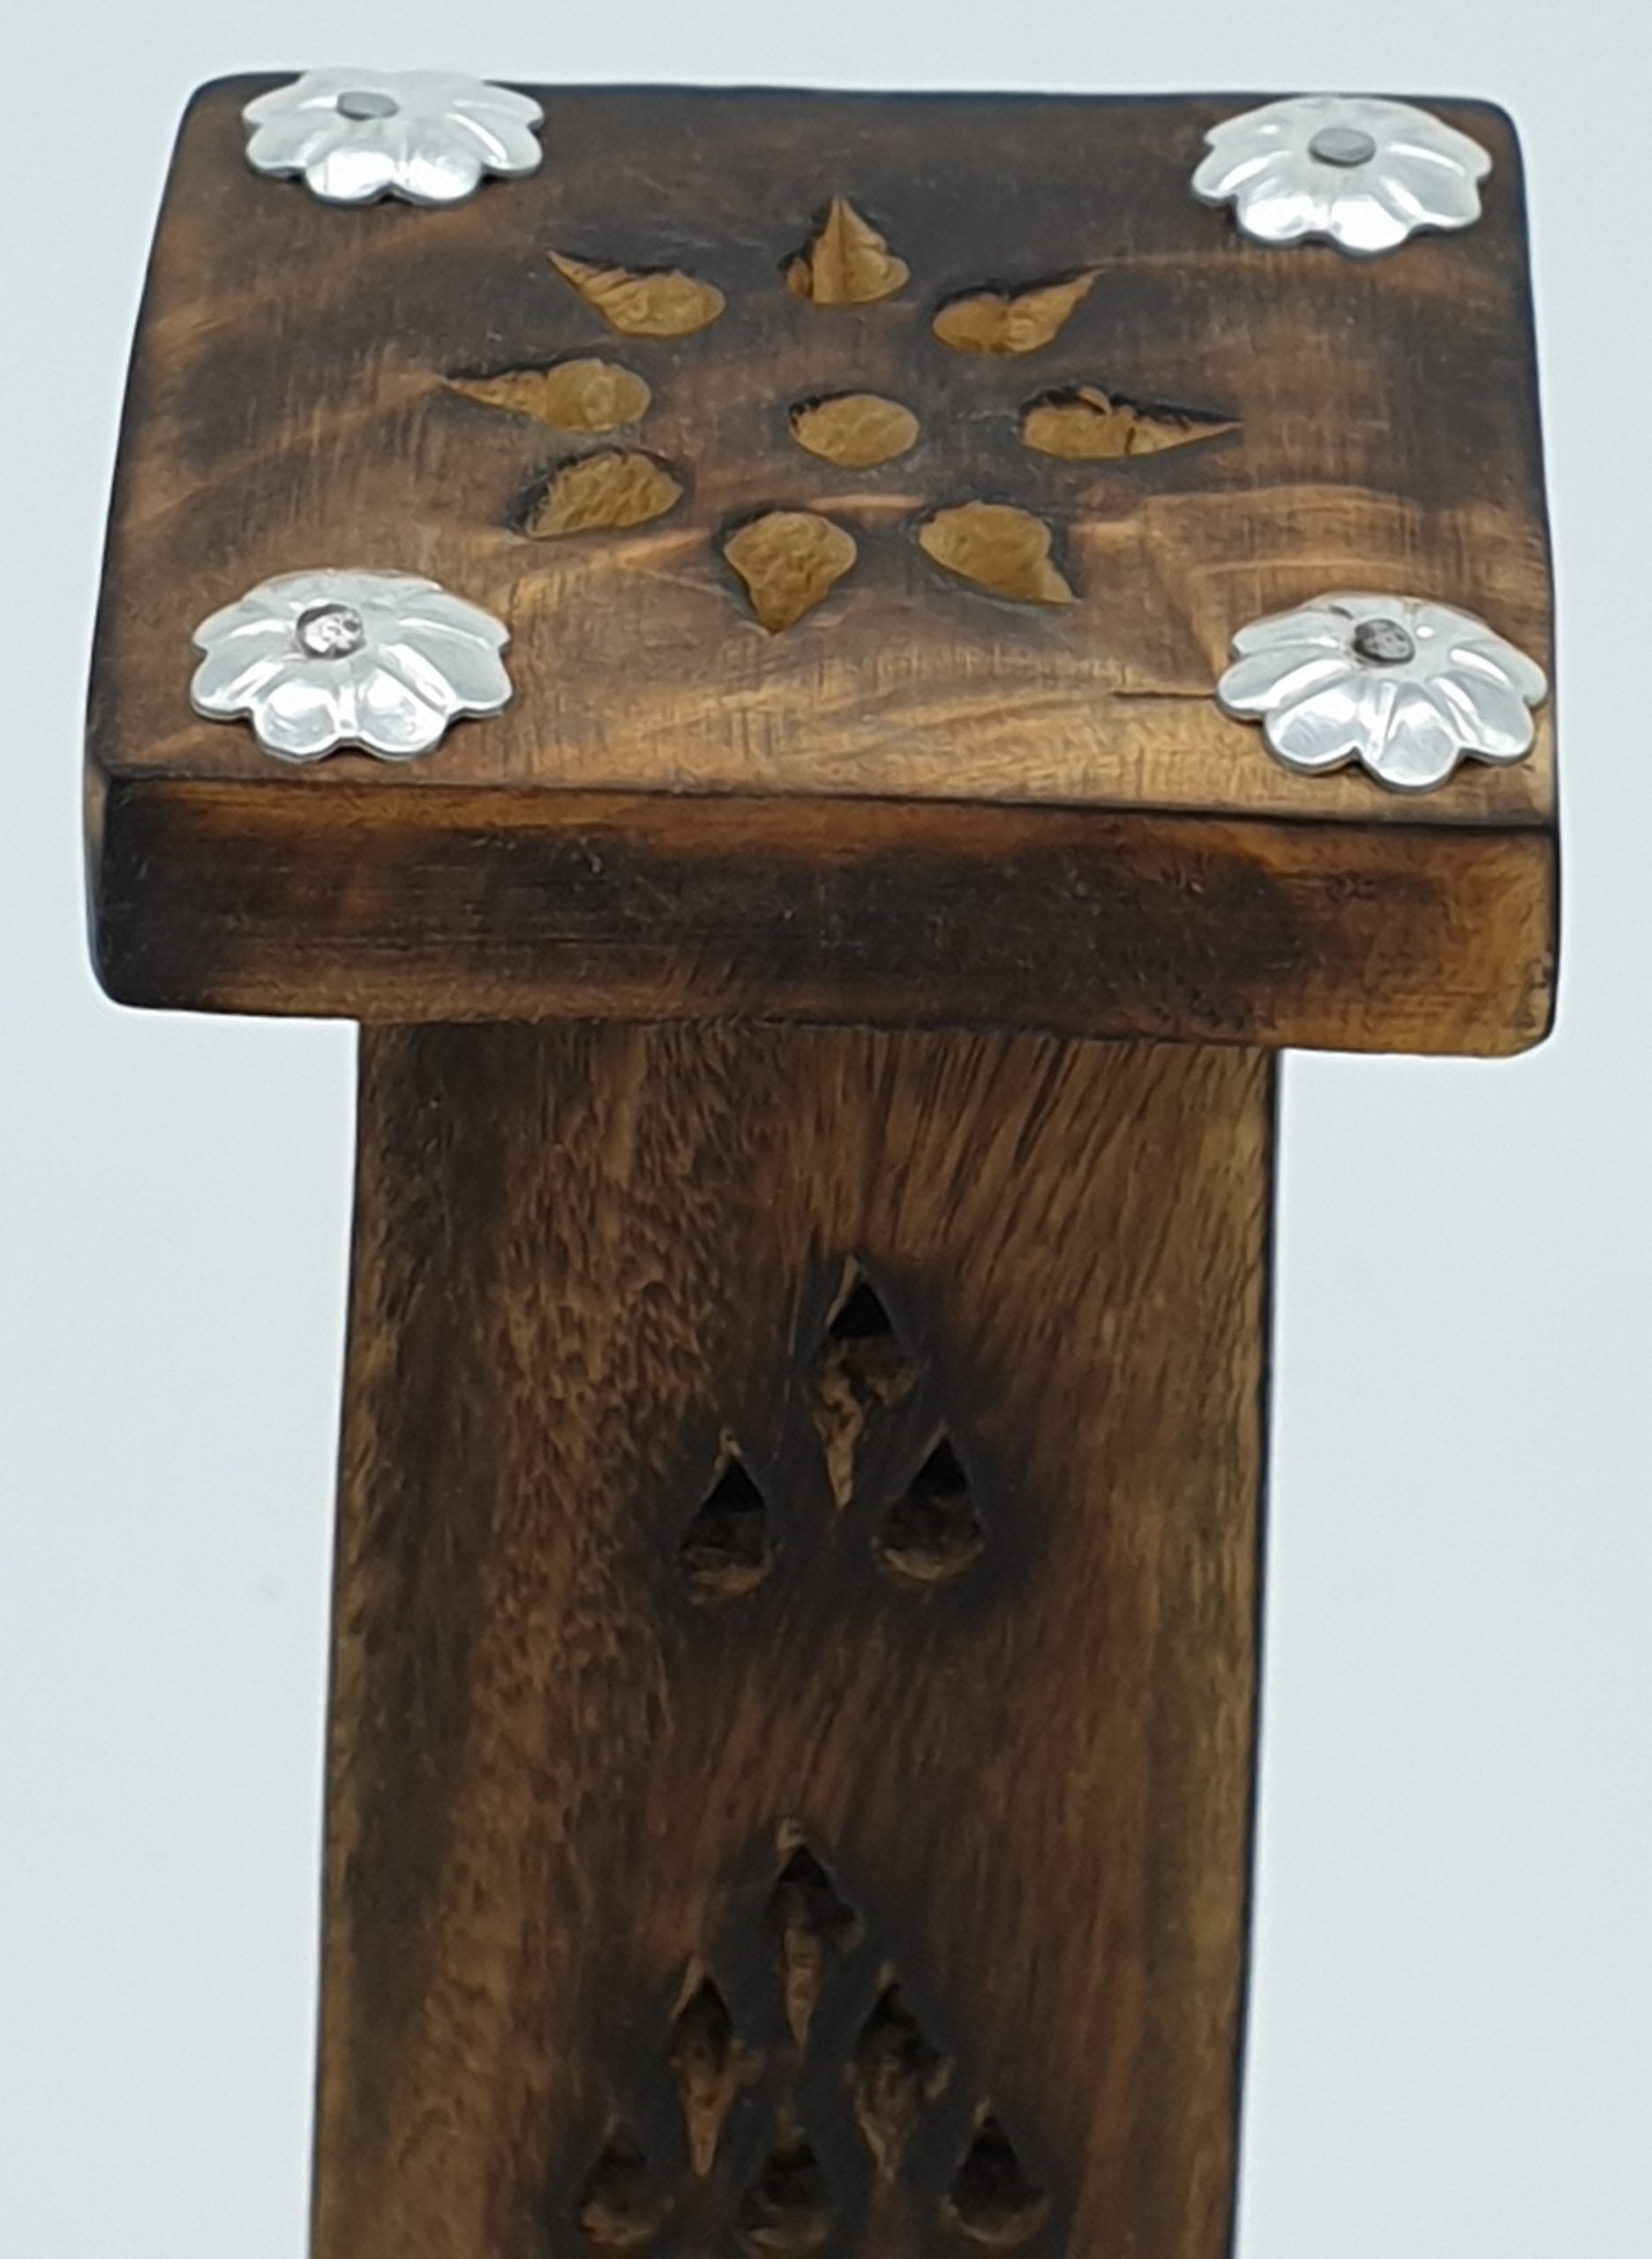 Tower Box Incense Holder With Elephant Inlay - Mango Wood